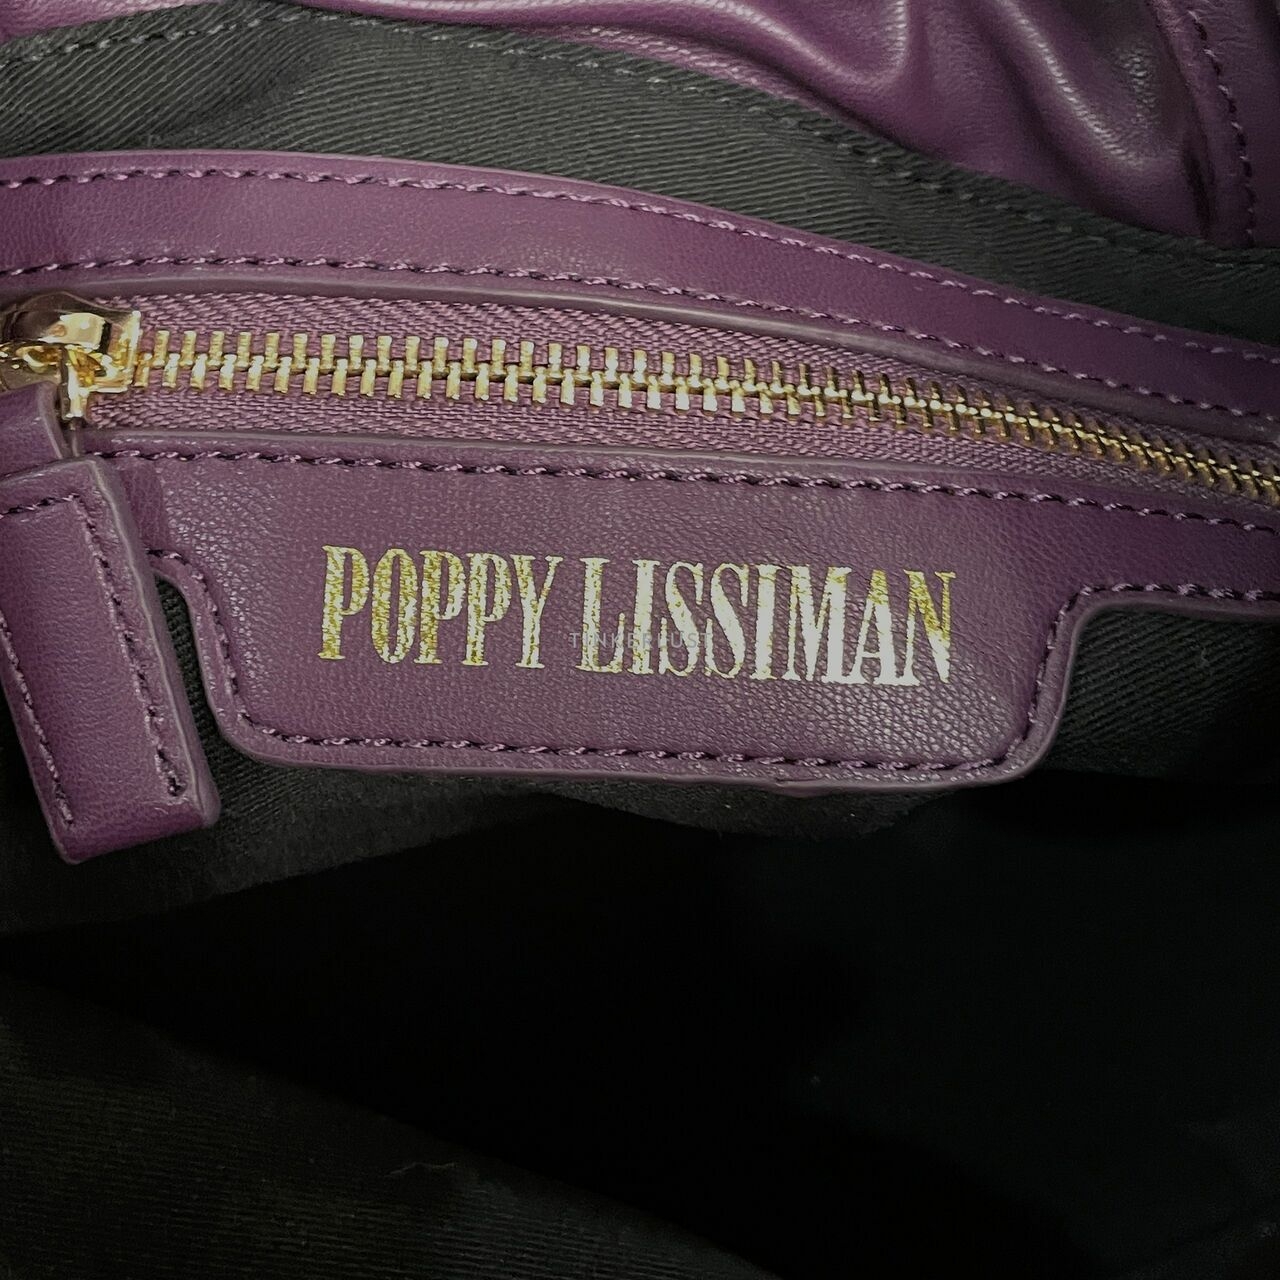 Poppy Lissiman  Purple Satchel